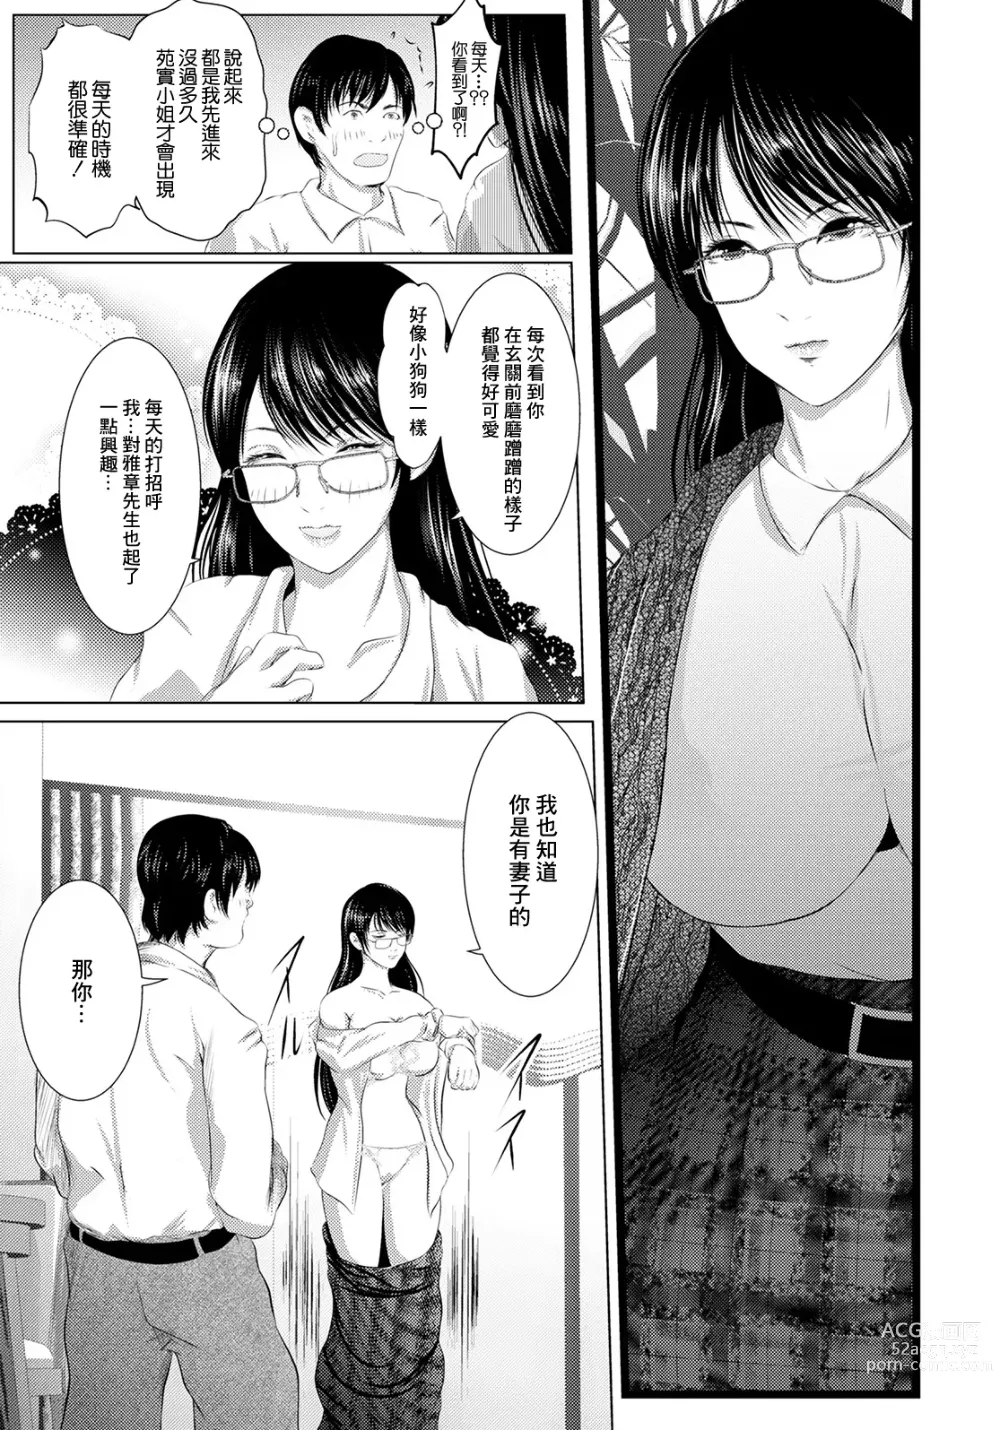 Page 7 of manga Tonari no Onna